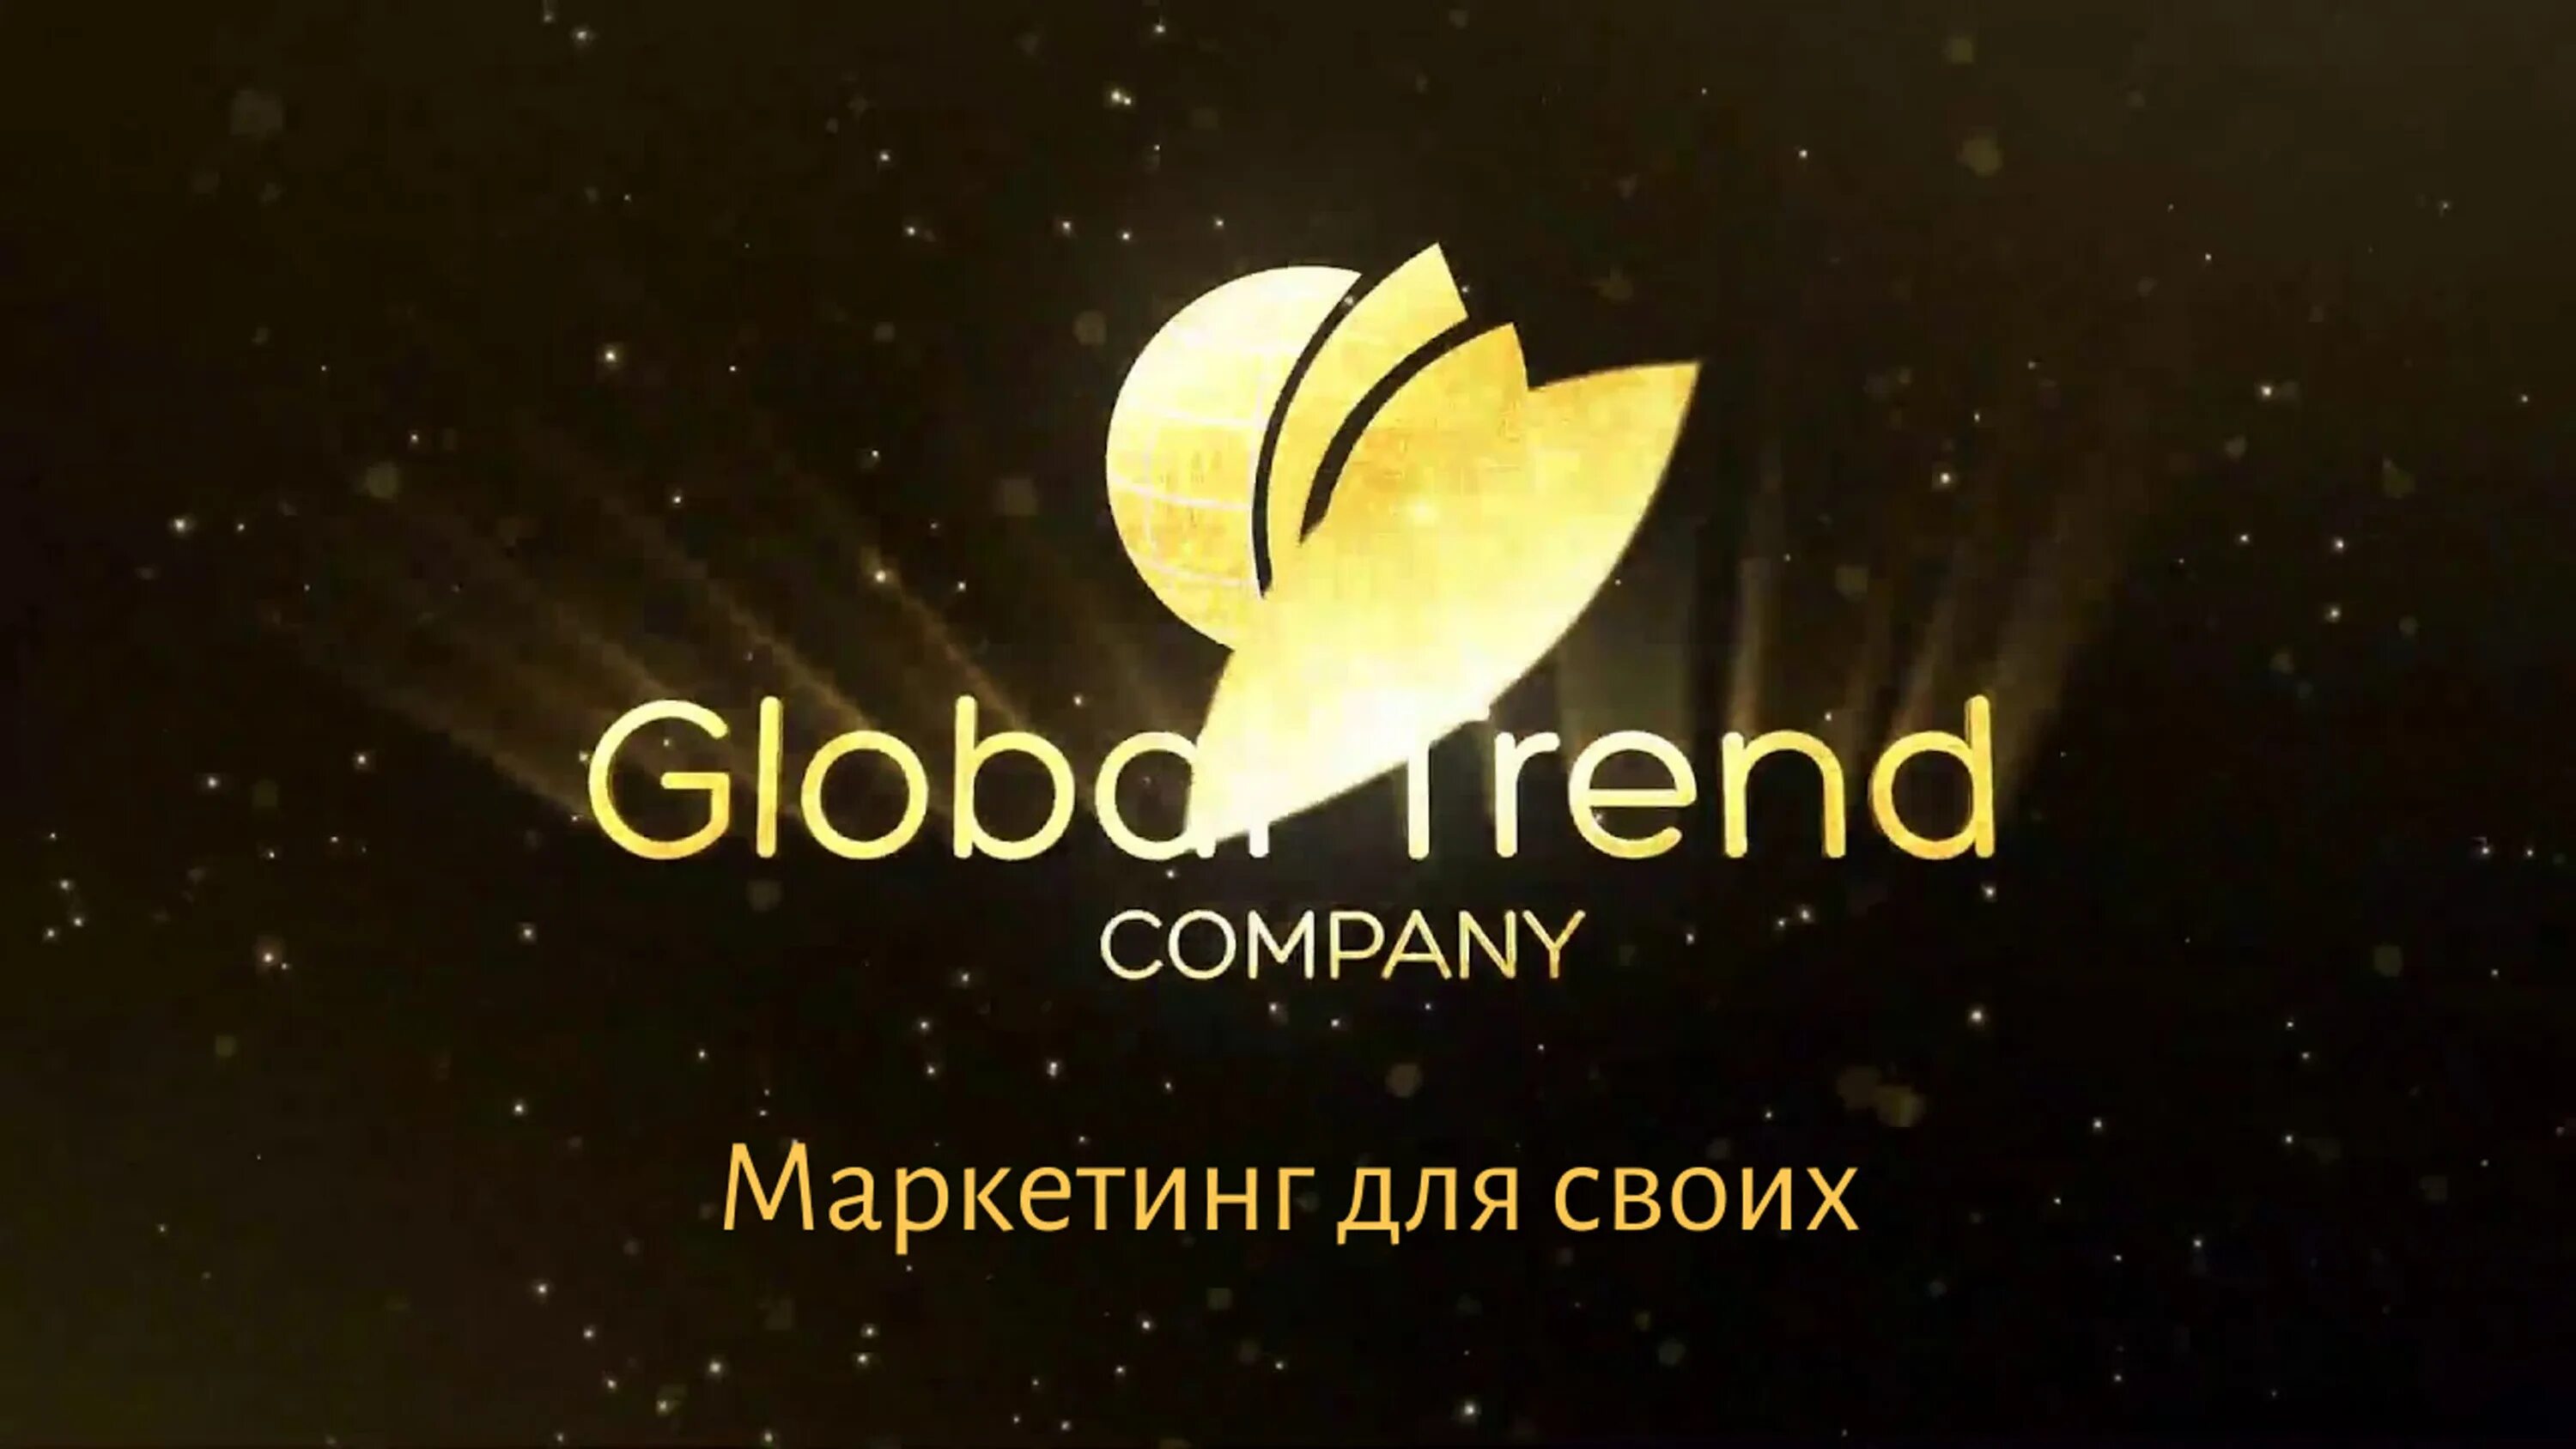 Global trend company кабинет. Глобал тренд. Логотип компании Global trend. Картинки Глобал тренд Компани. Глобал тренд продукция.